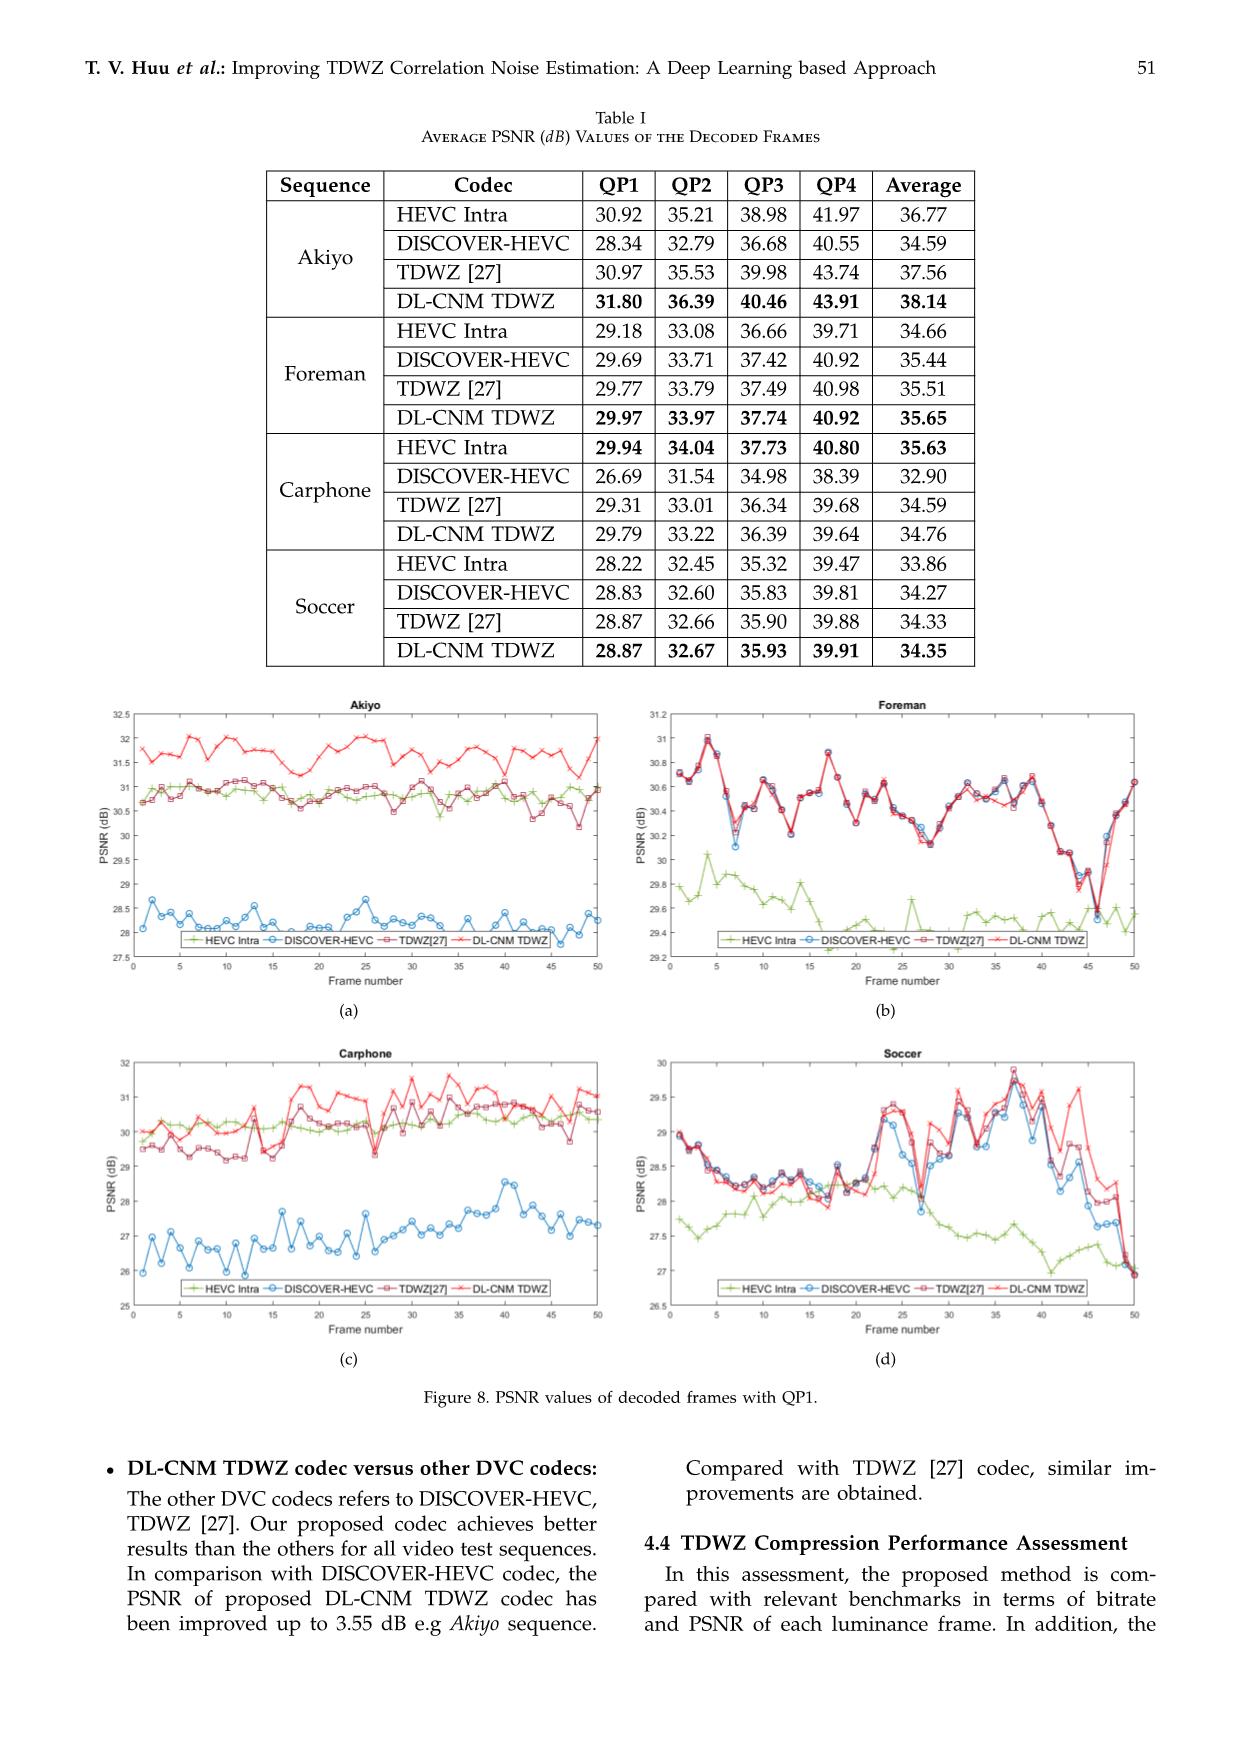 Improving TDWZ correlation noise estimation: A deep learning based approach trang 7